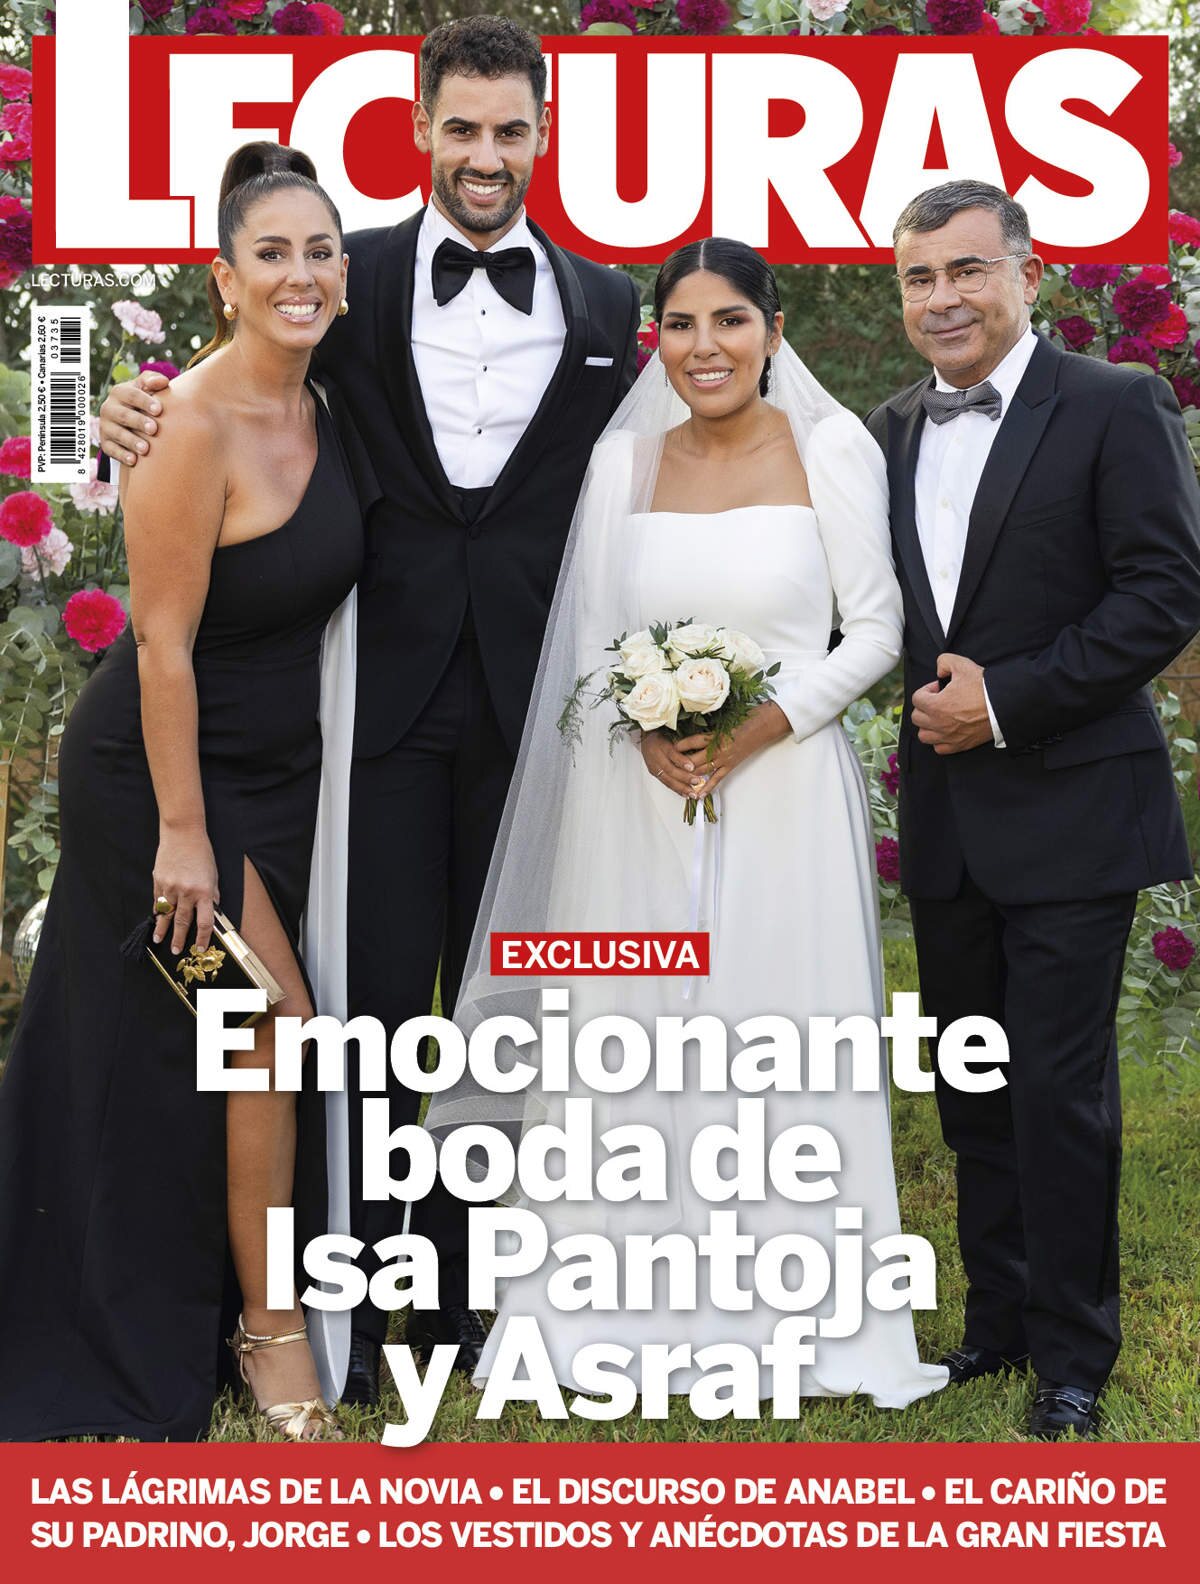 Jorge Javier, padrino de la boda de Isa Pantoja y Asraf | Foto: Lecturas